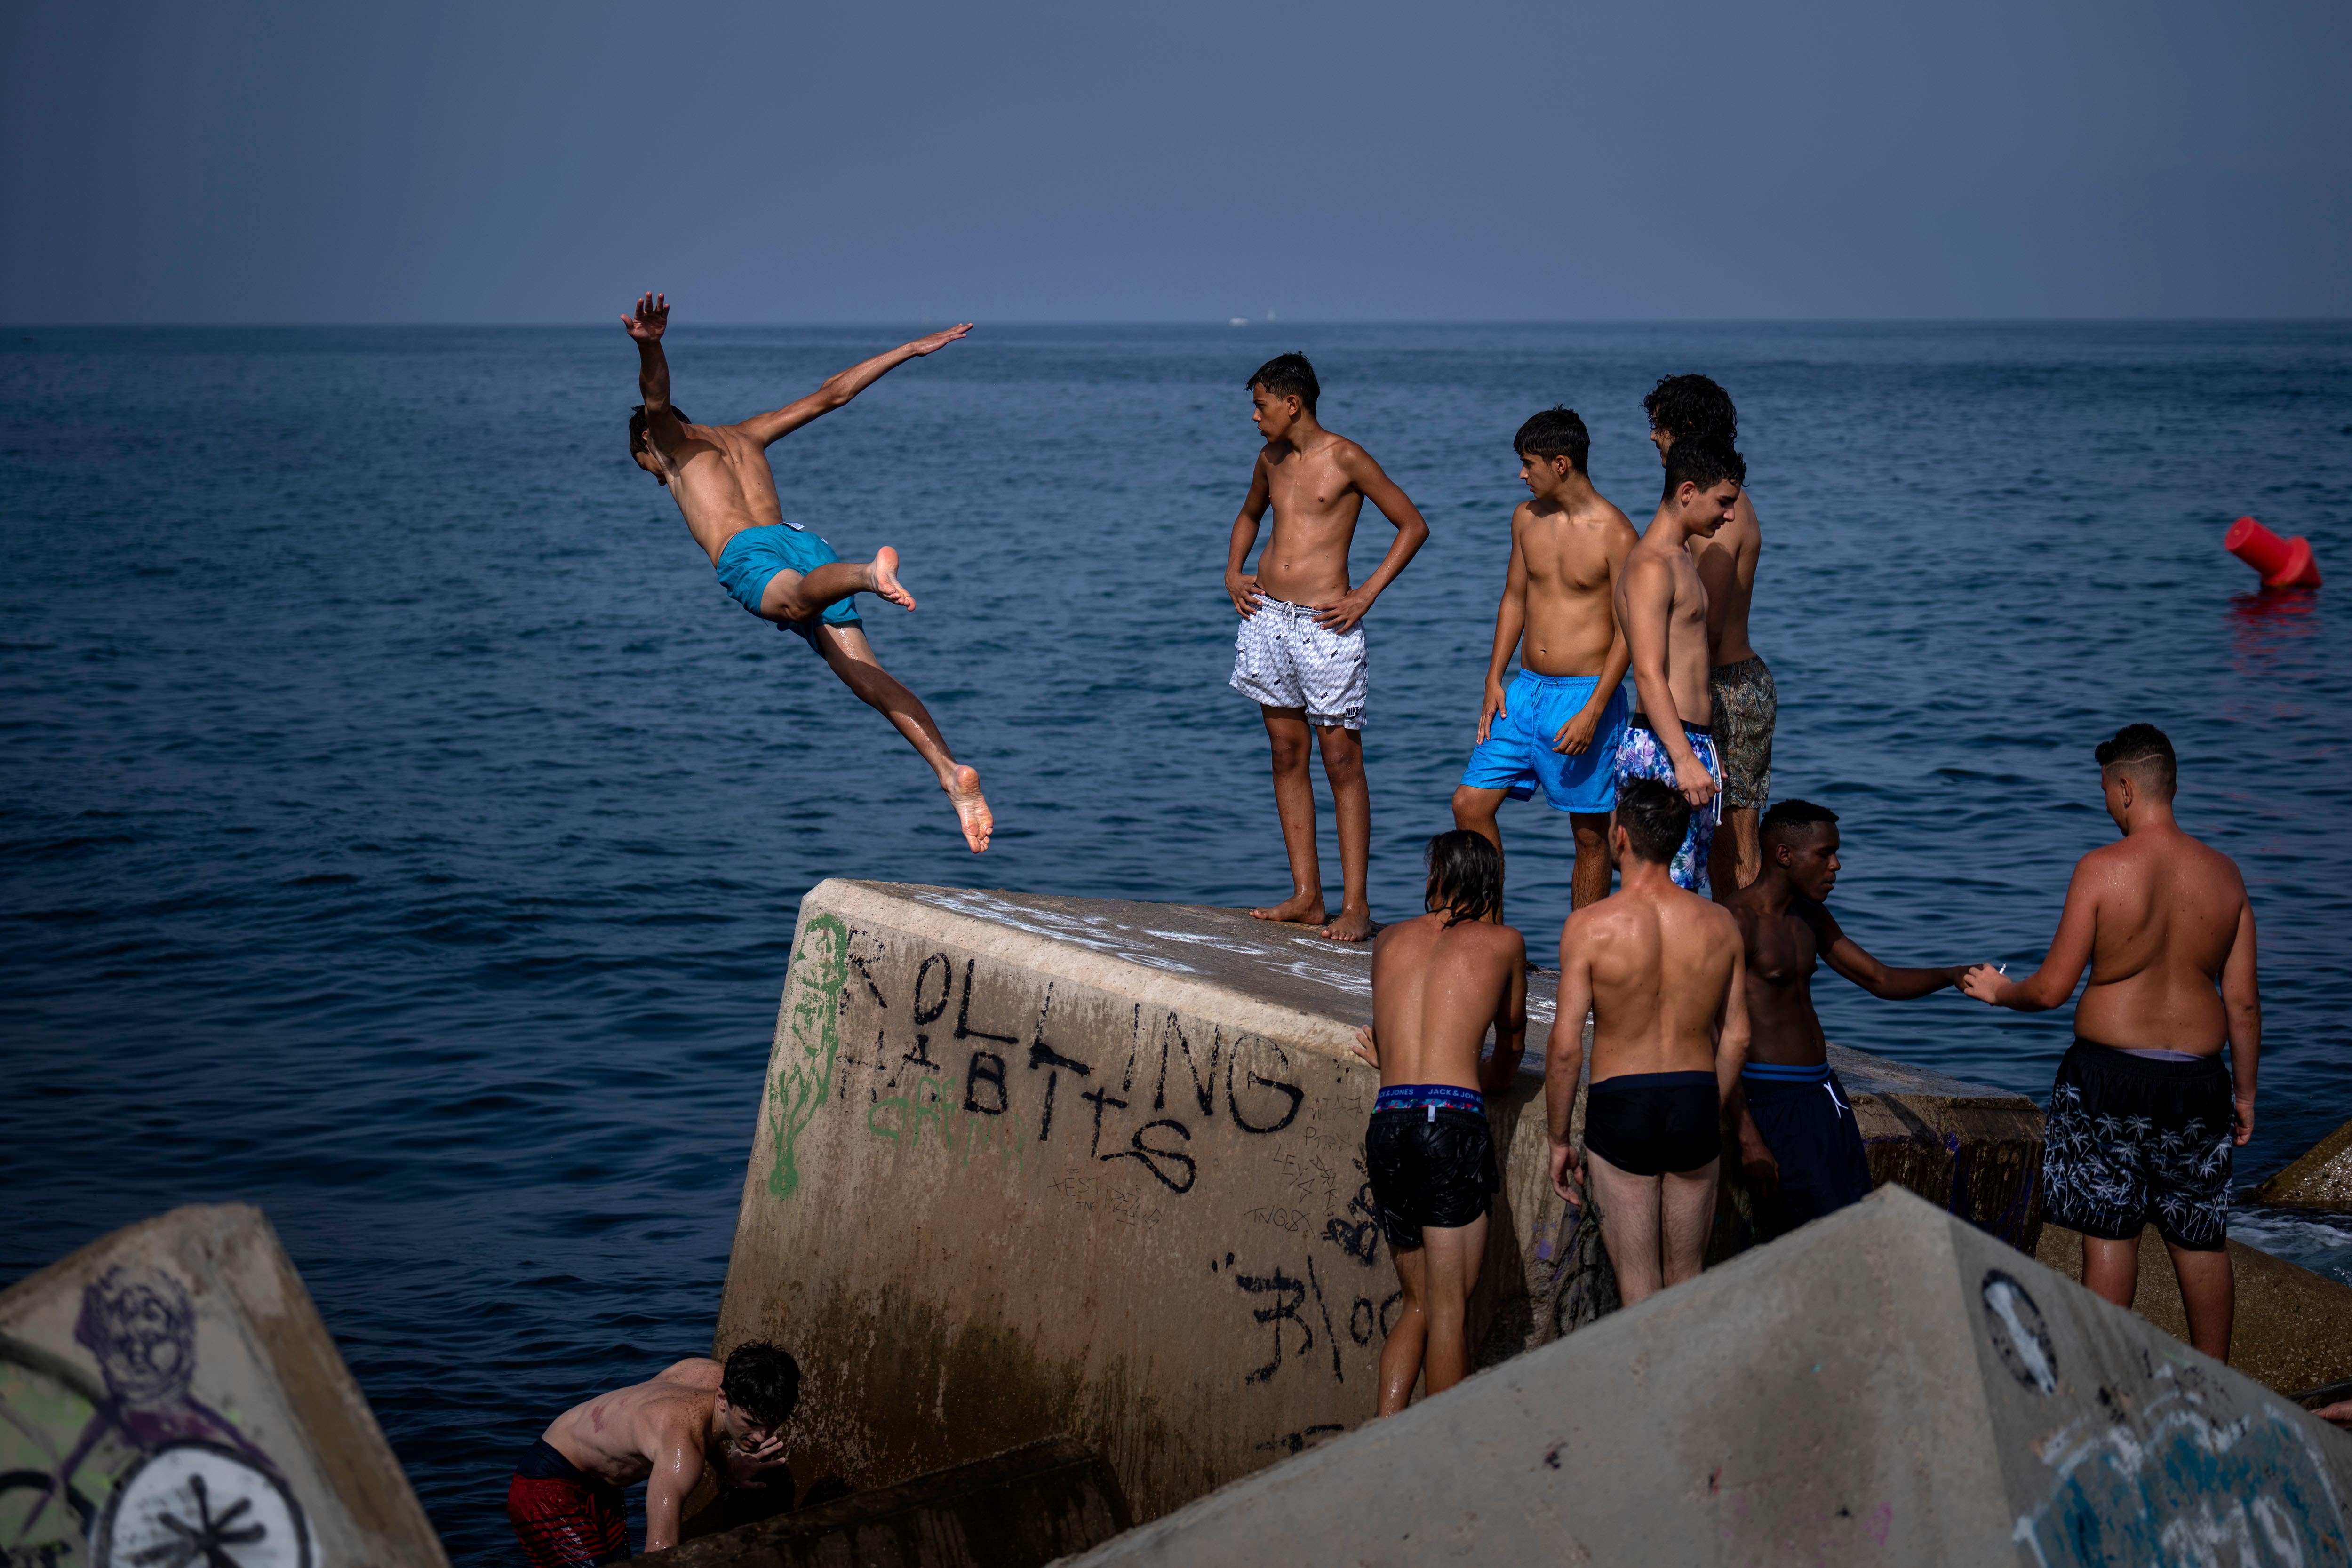 A youth jumps into the sea on a breakwater in Barcelona (AP Photo/Emilio Morenatti)